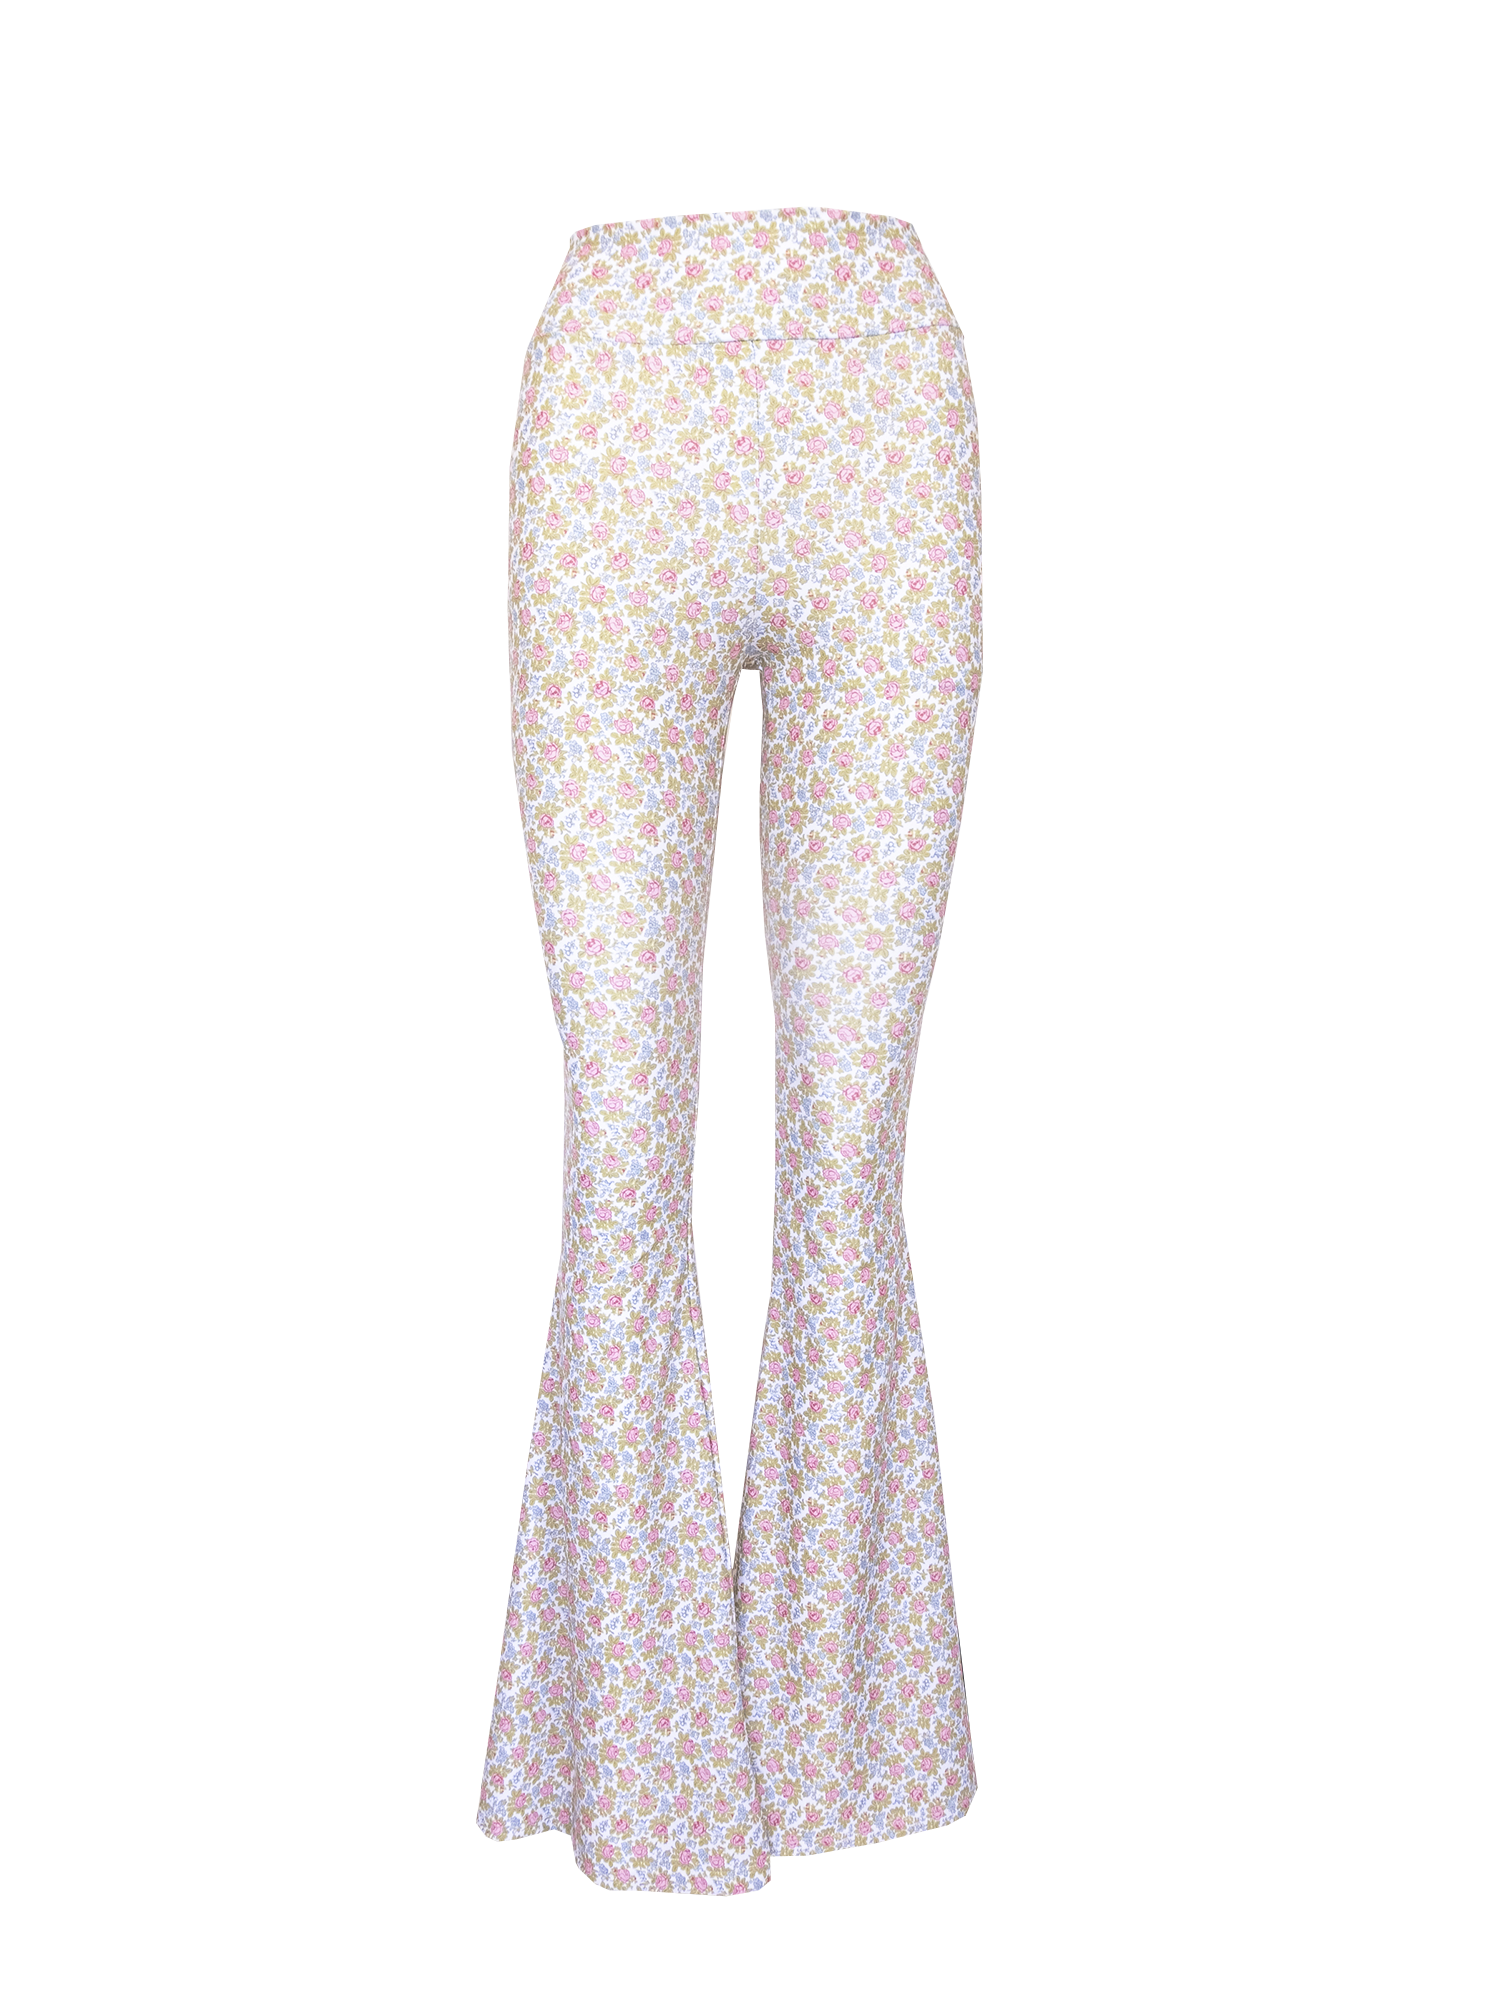 LOLA - flared pants in Ephrussi patterned lycra